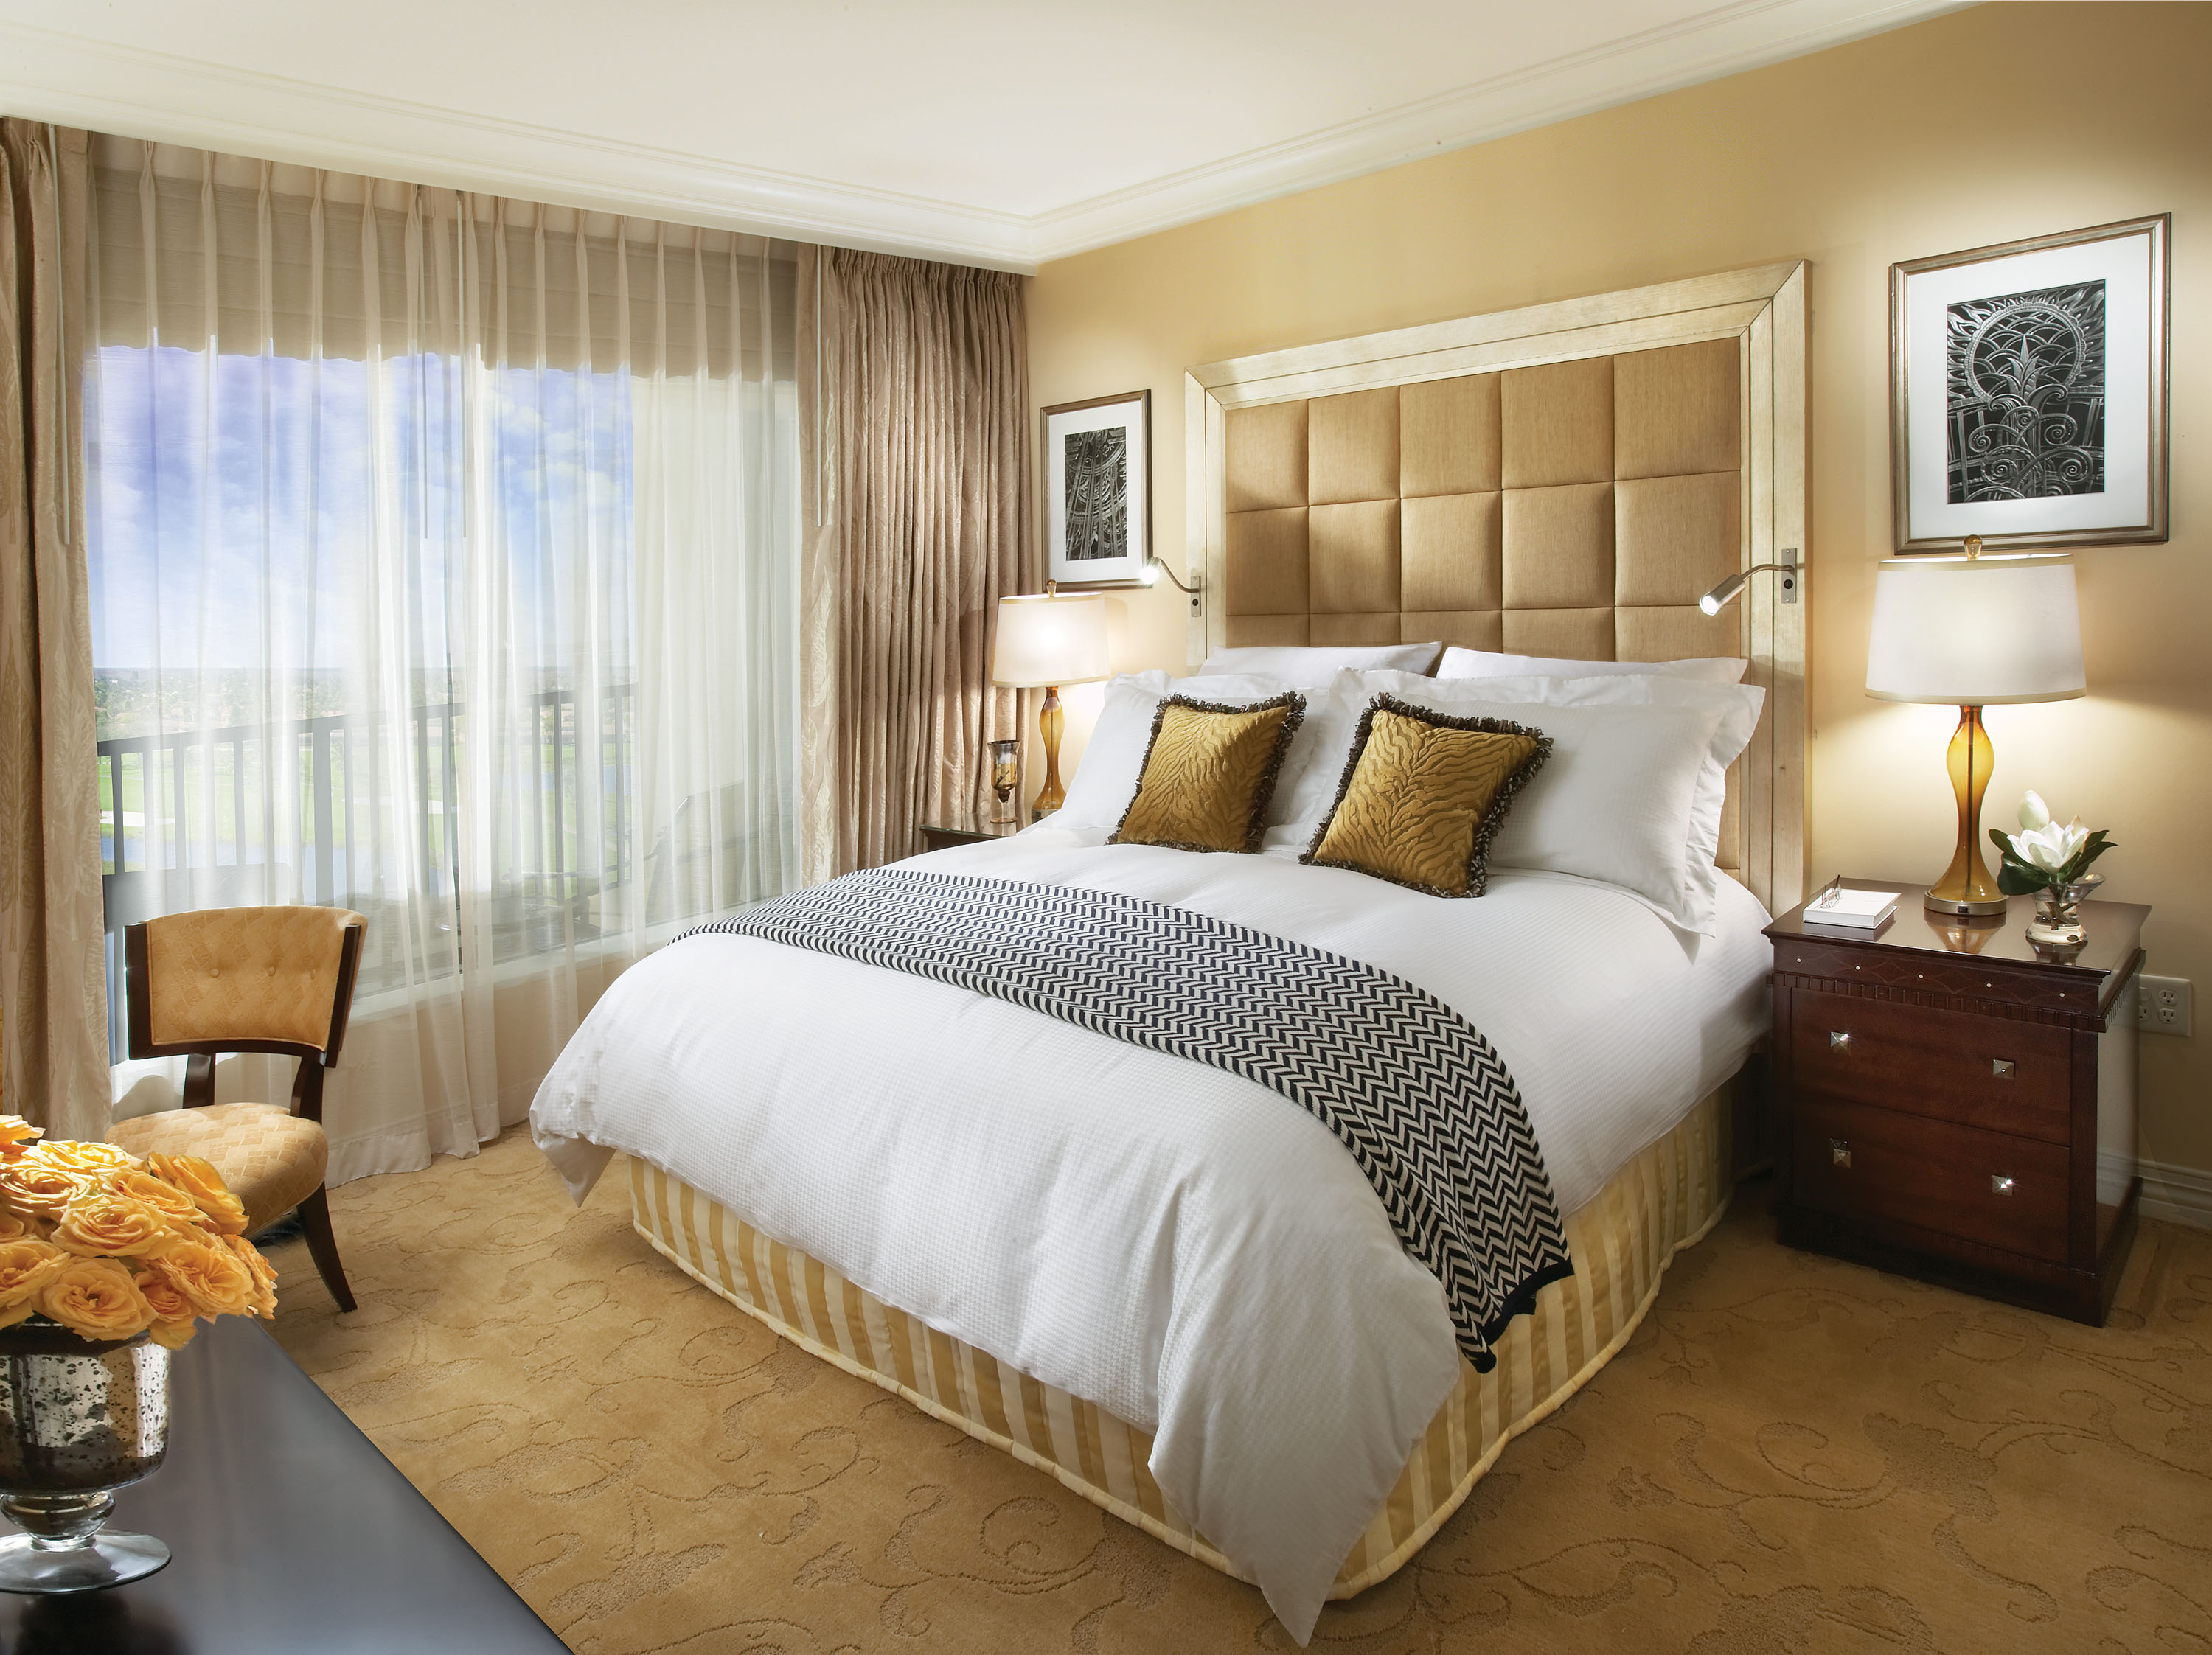 luxury bedroom design ideas 093